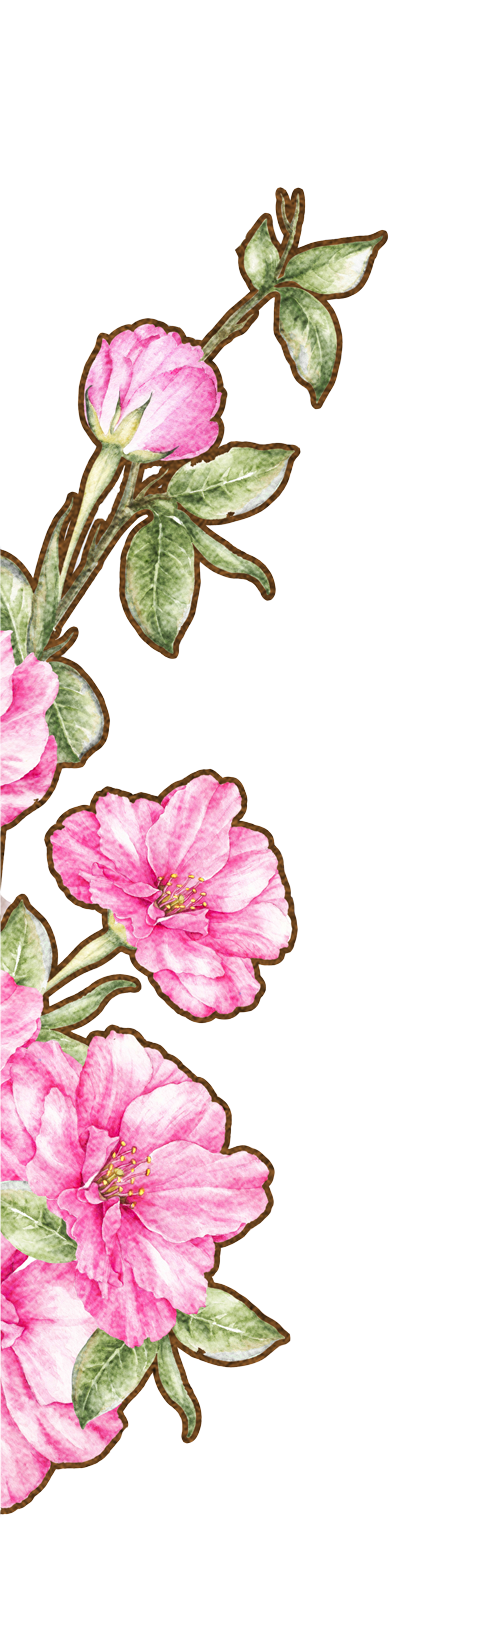 Ксения Сухинова, Ян Гэ, Маргарита Мамун и Юлианна Караулова — о весне и любимых цветах (фото 7)